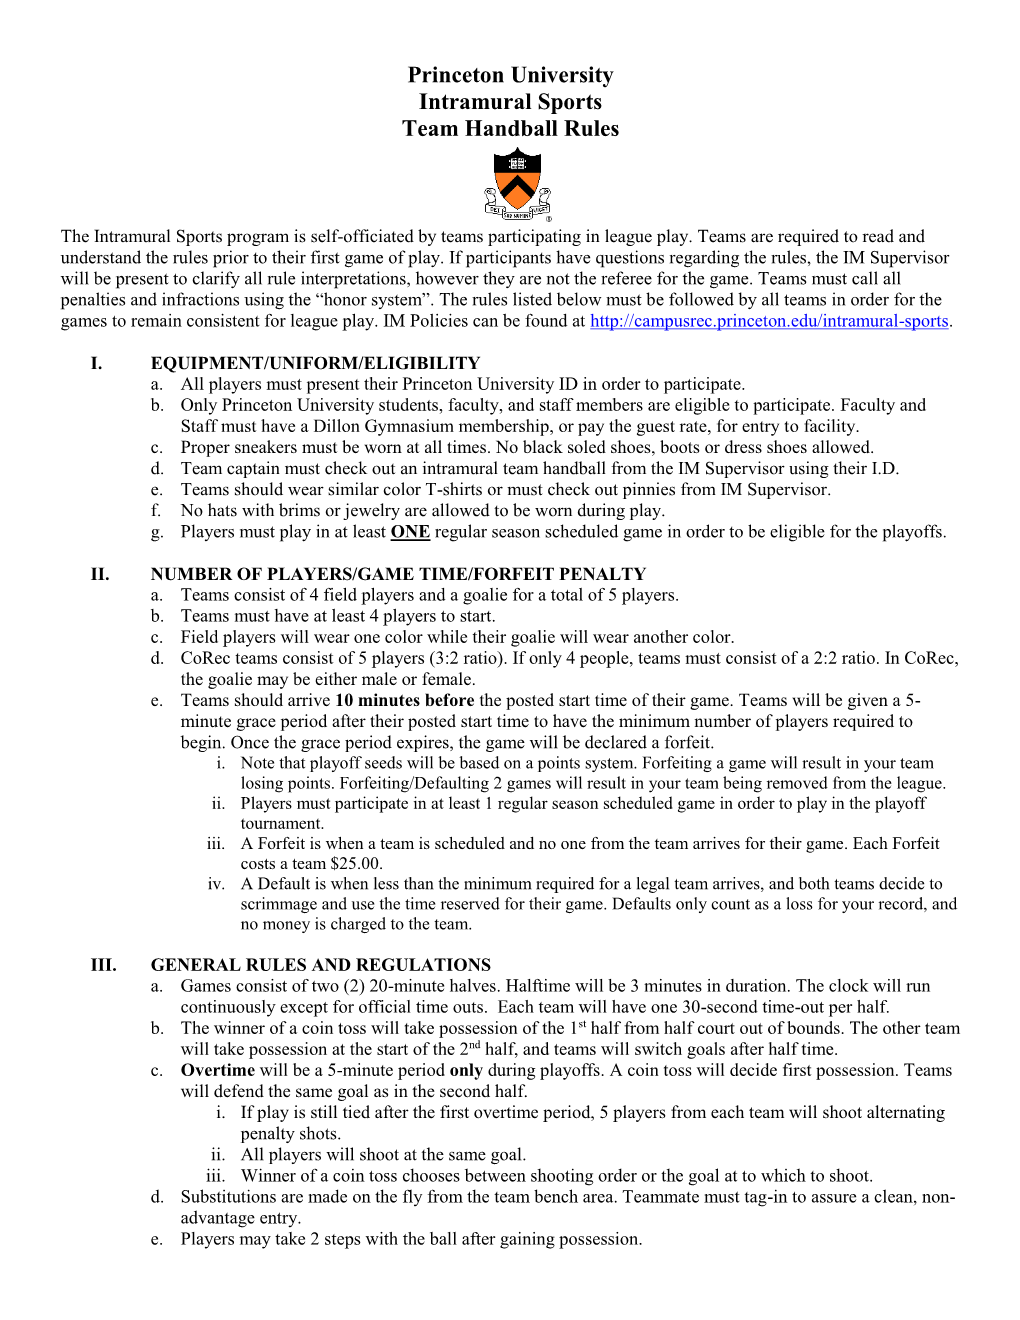 Princeton University Intramural Sports Team Handball Rules